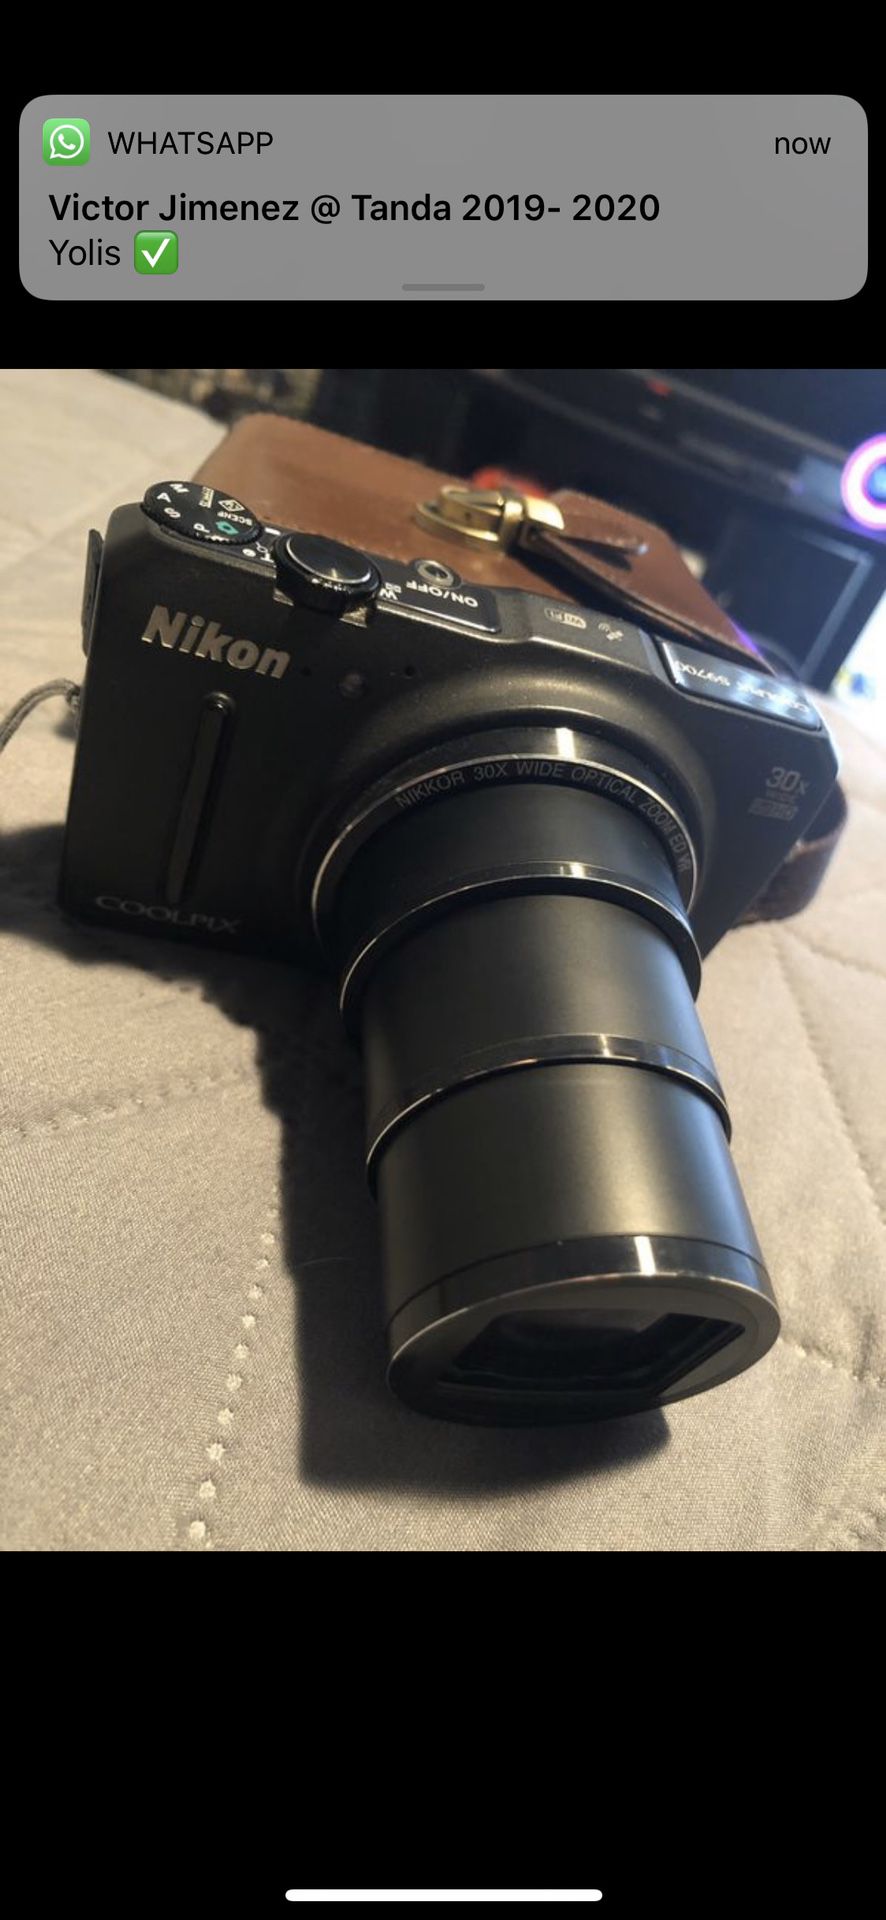 Nikon digital camera 30x zooom WiFi